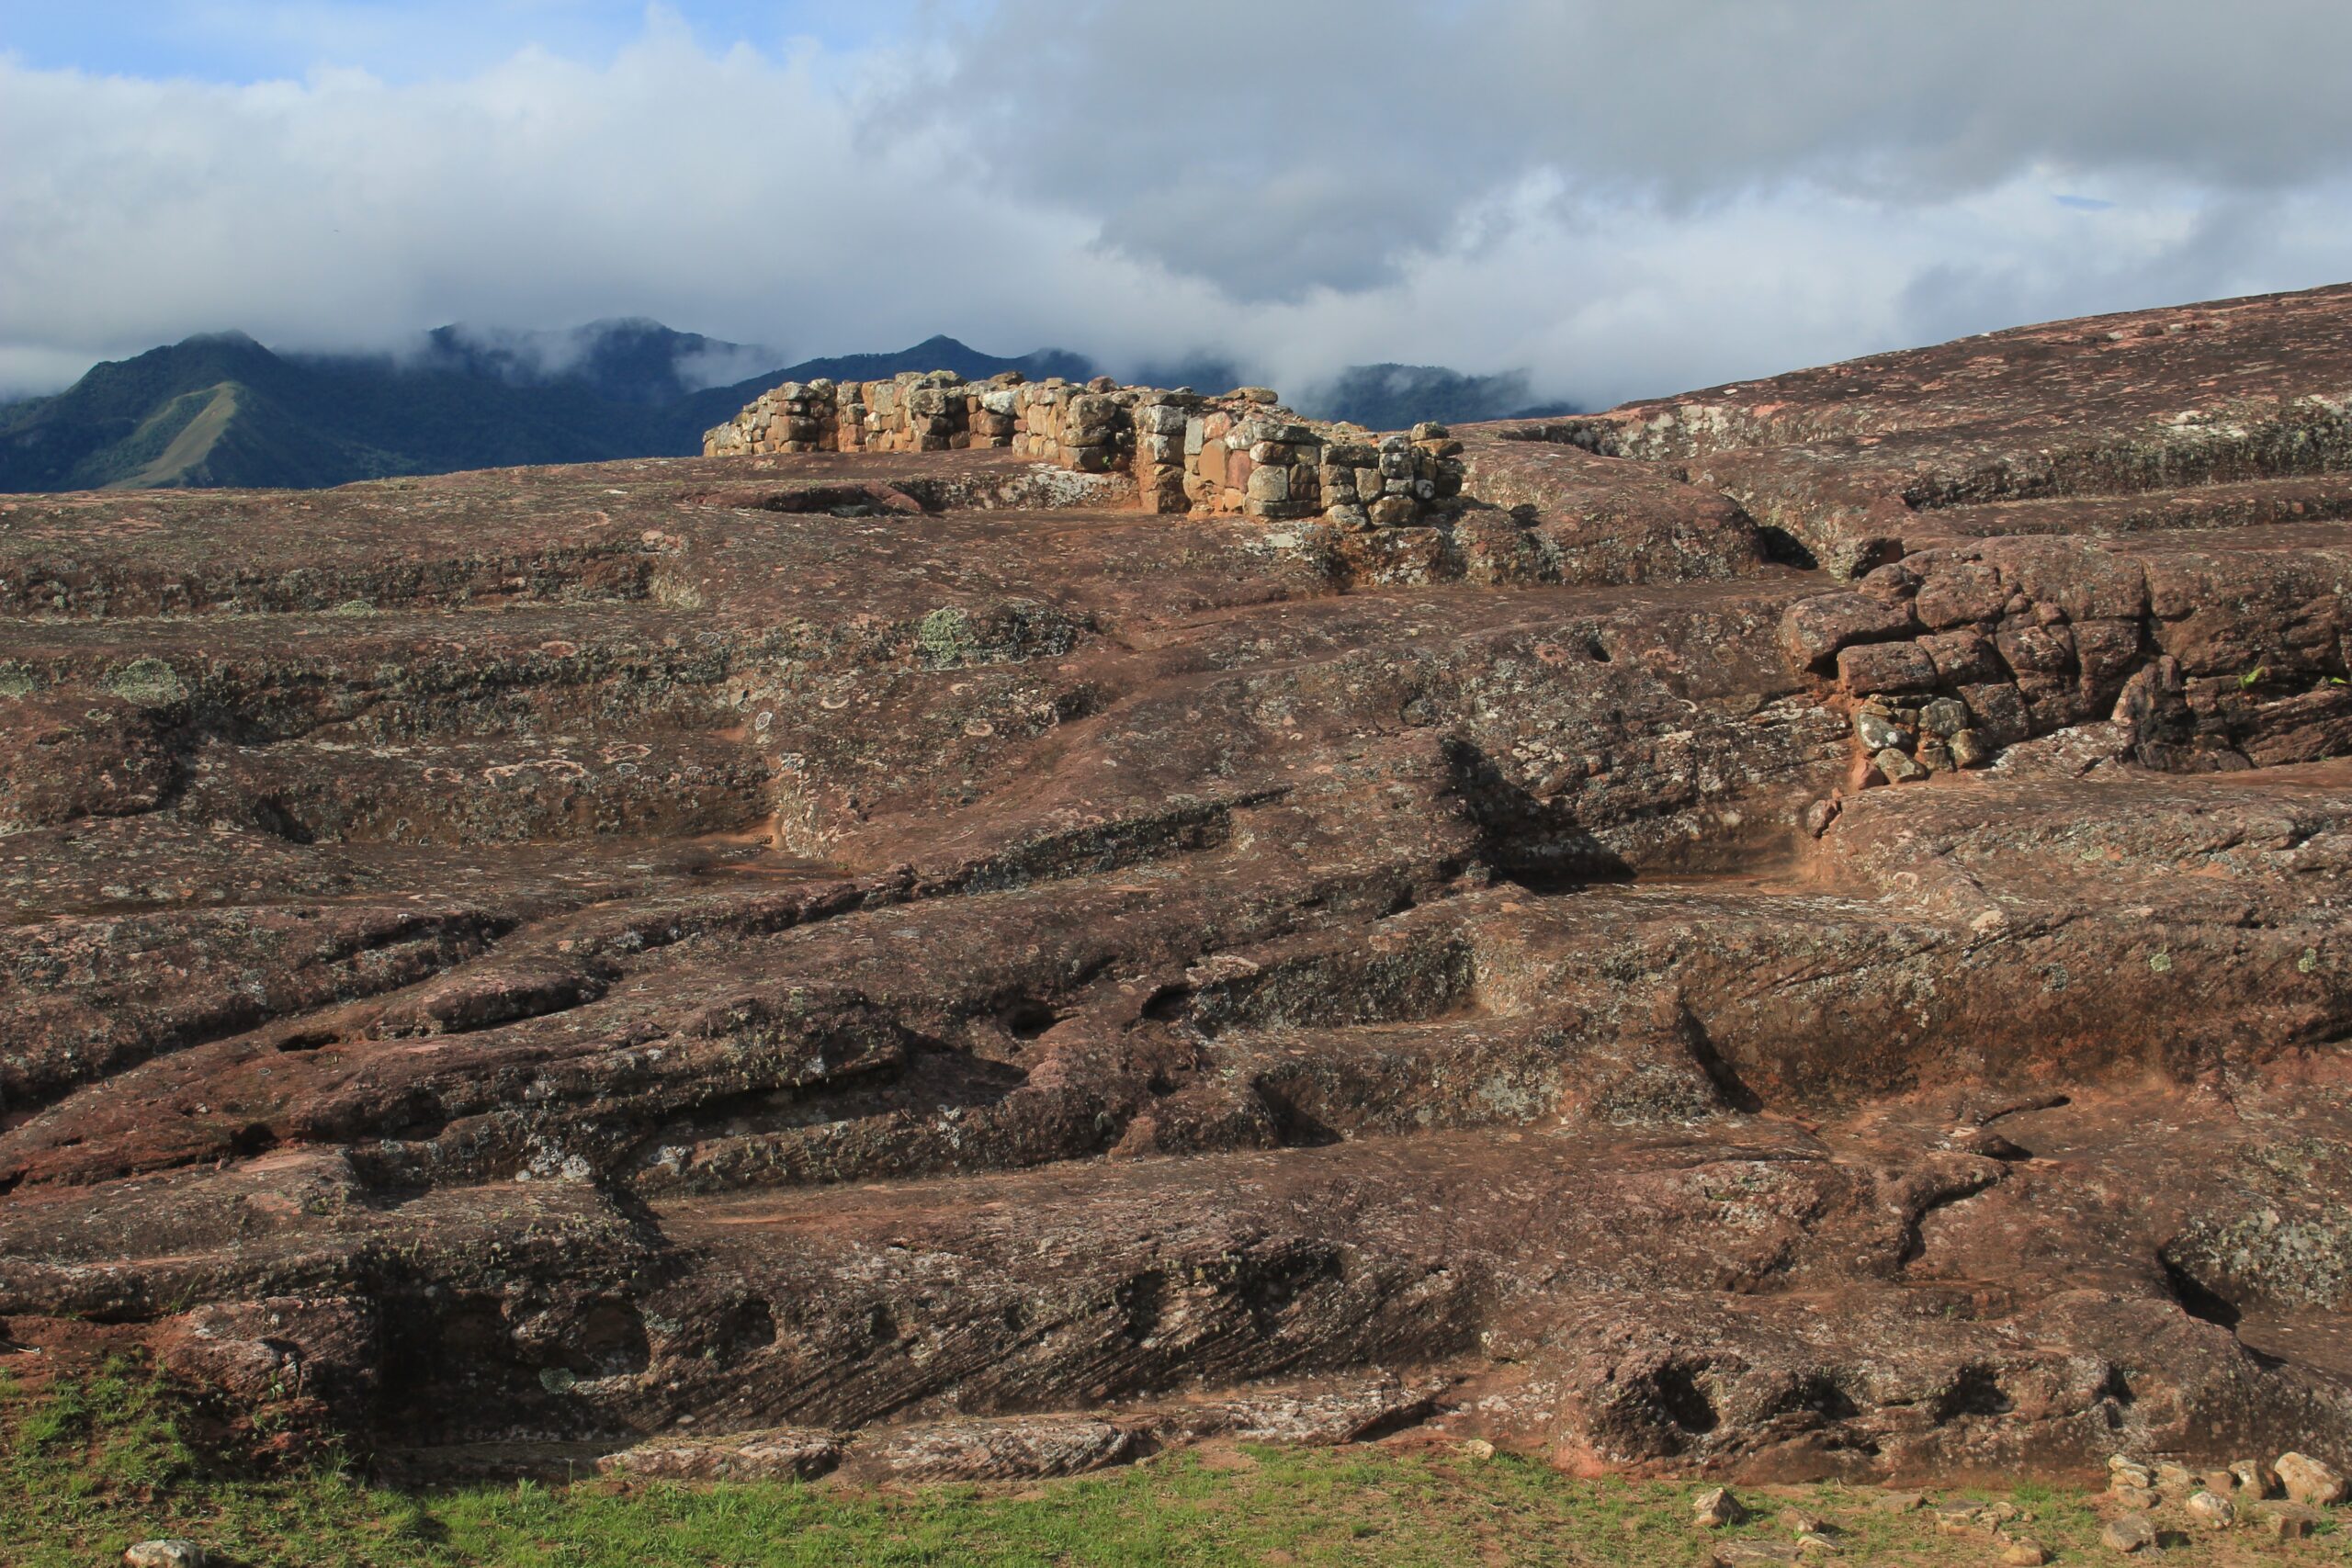 The Andes Mountains surround the El Fuerte de Samaipata ruins in Bolivia.